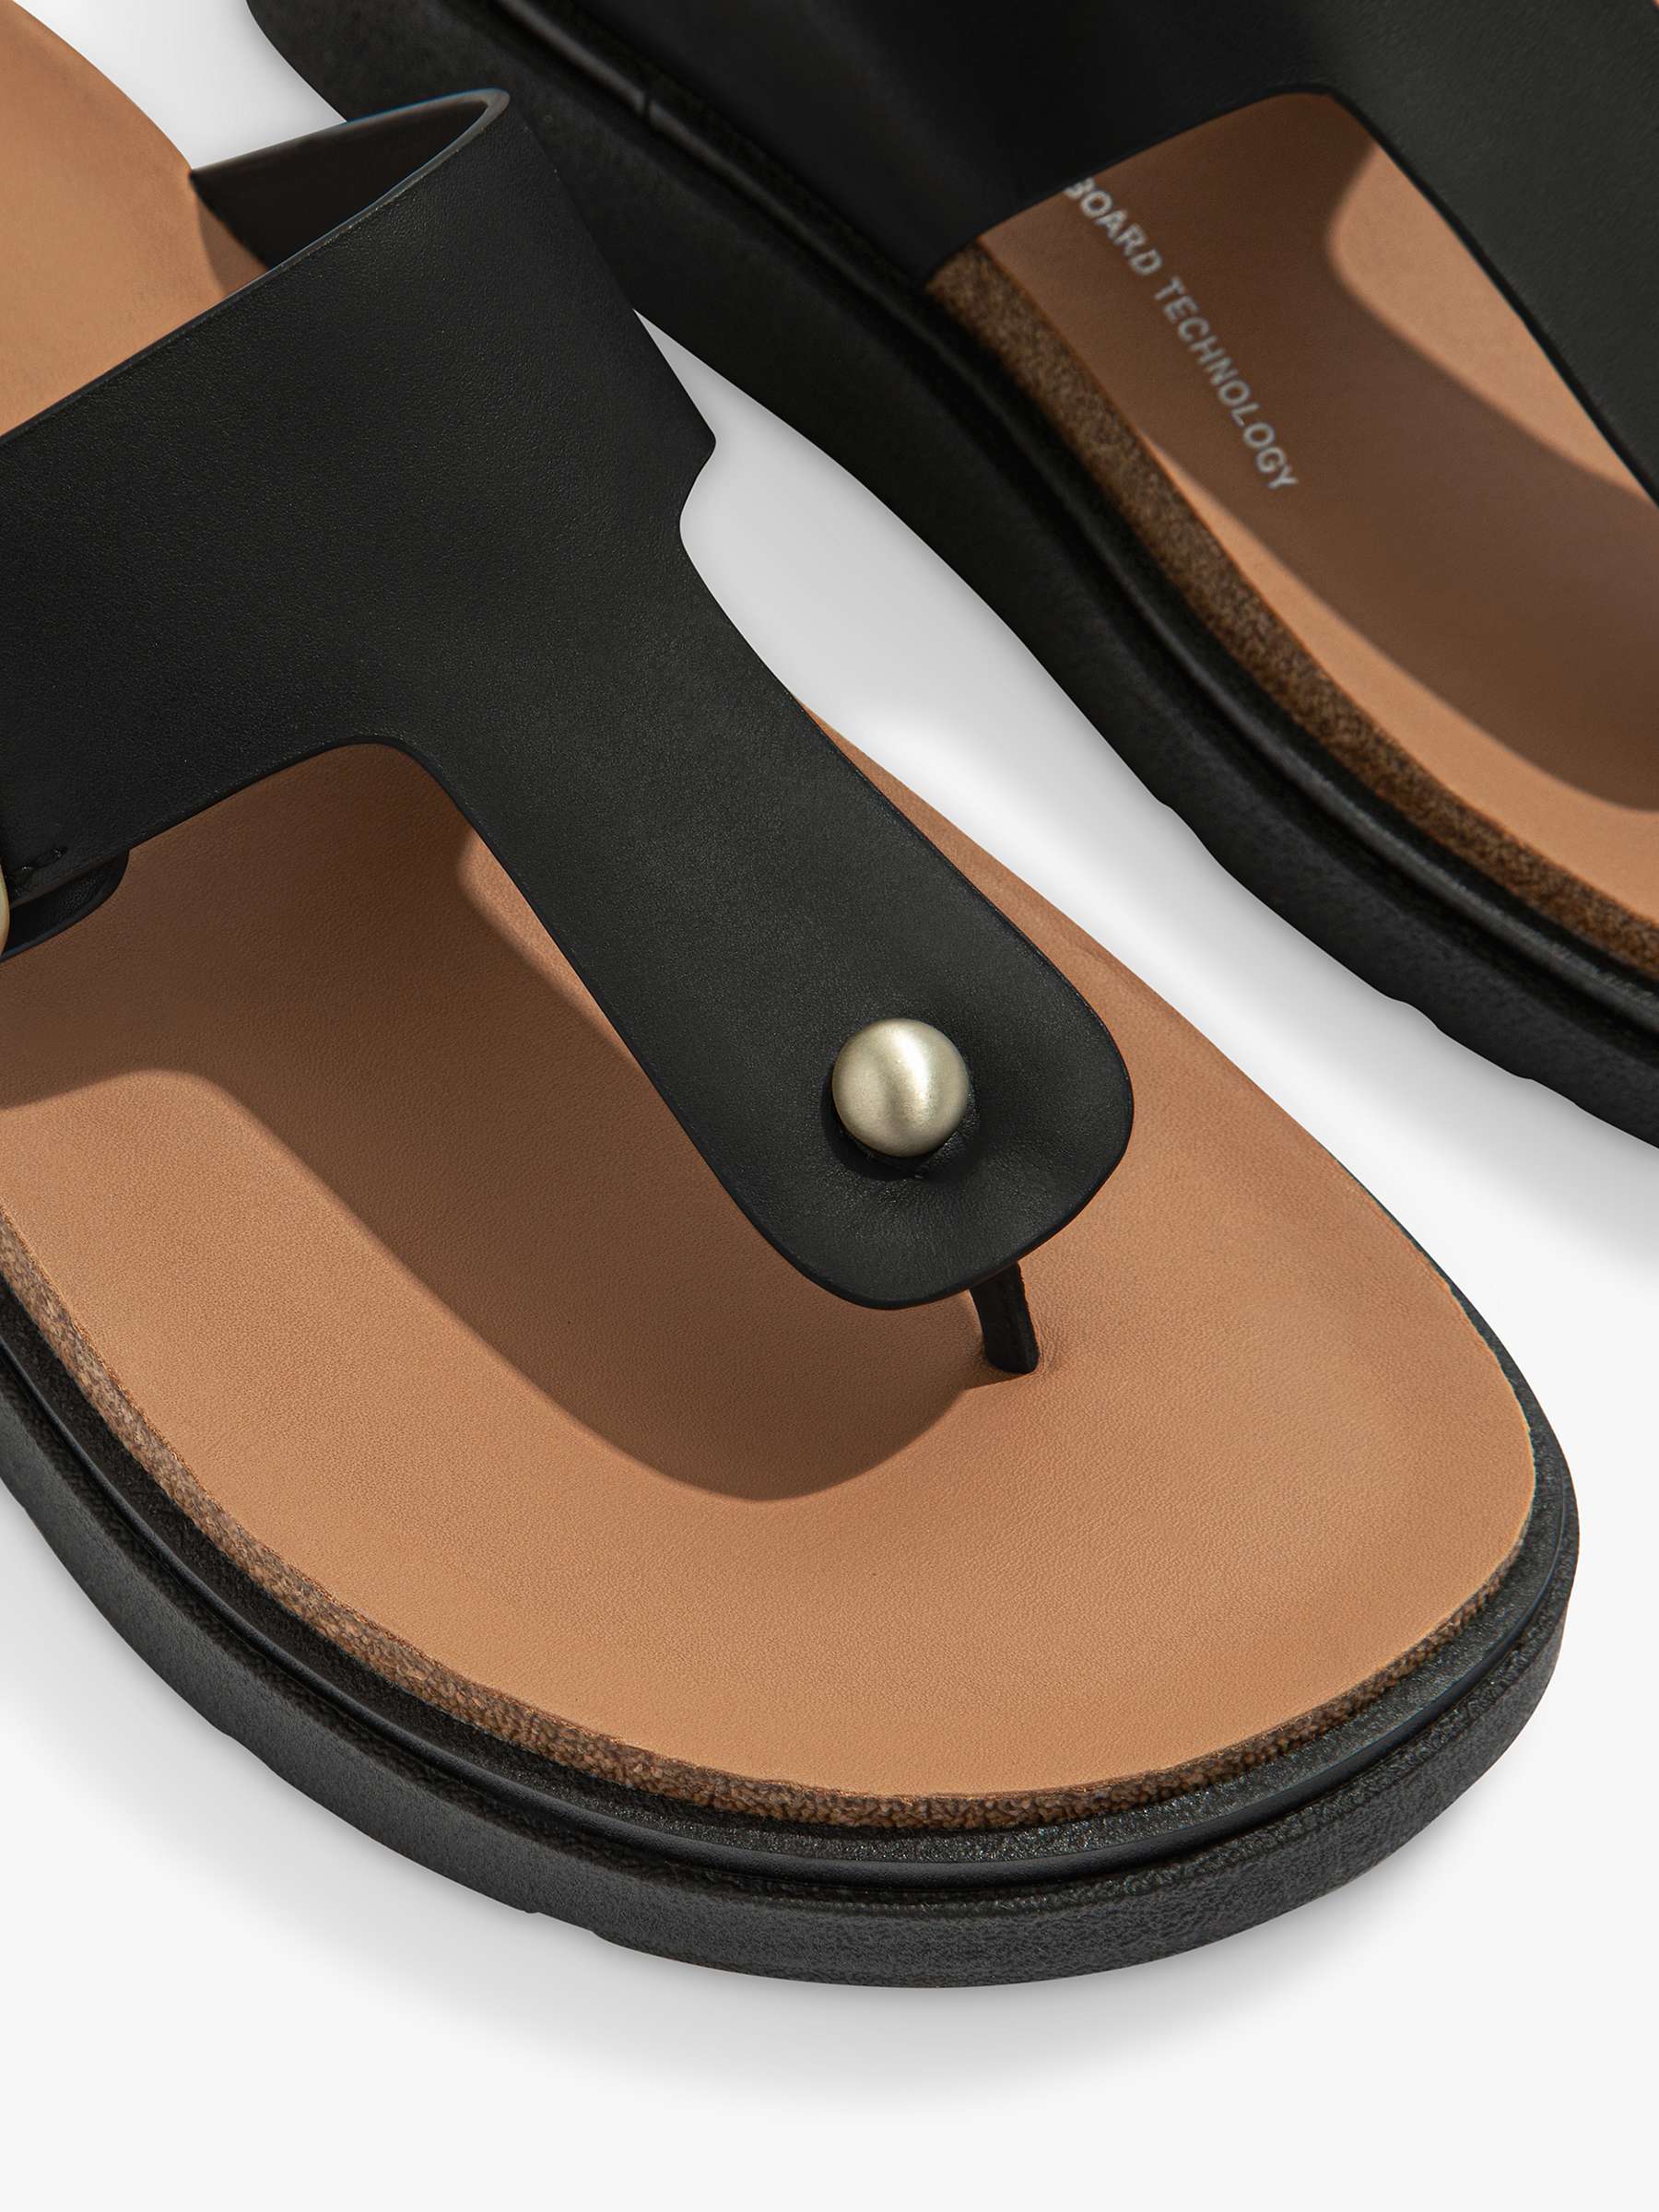 Buy FitFlop Leather T-Bar Sandals, Black Online at johnlewis.com